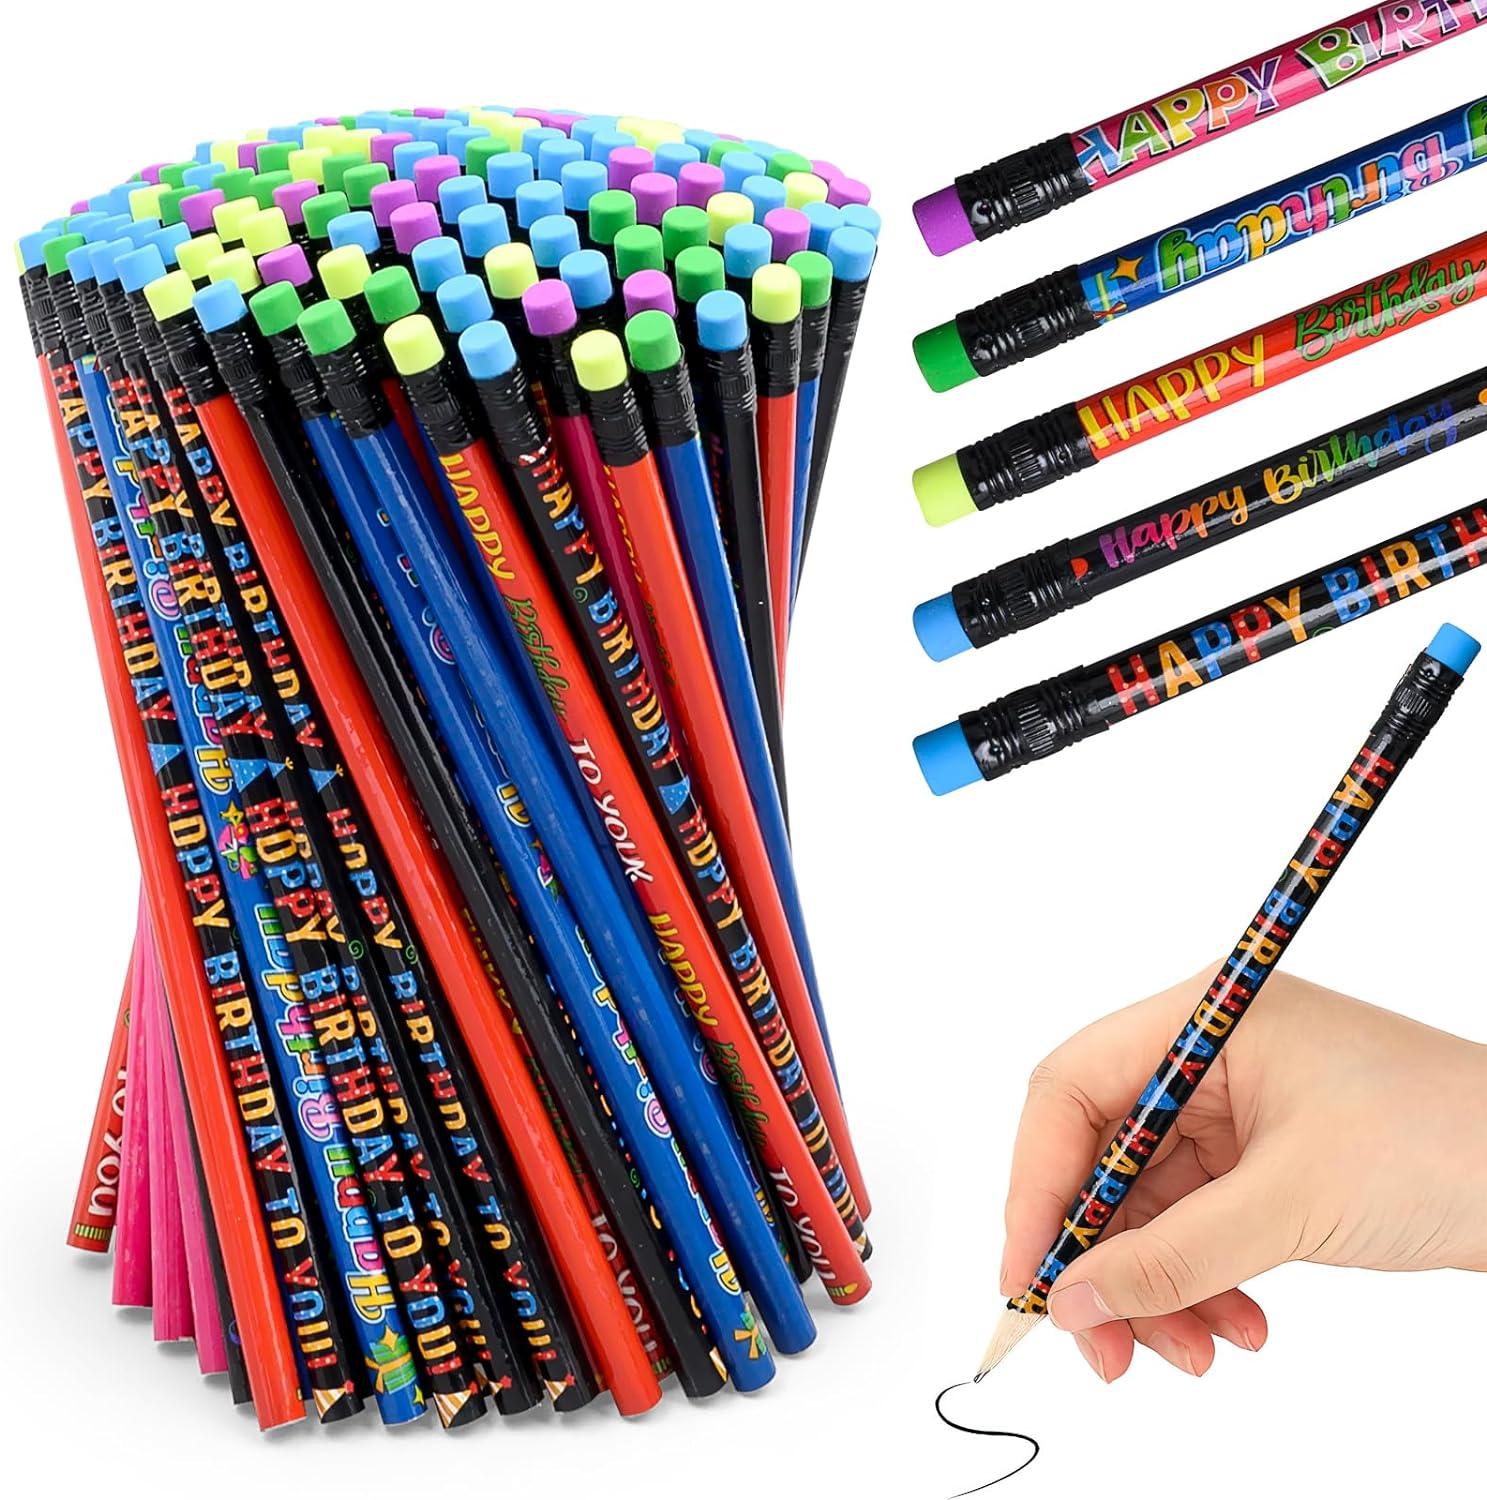 m-aimee 150 pcs bulk happy birthday pencils for students fun colorful printed  m-aimee b0cb3ml9mm